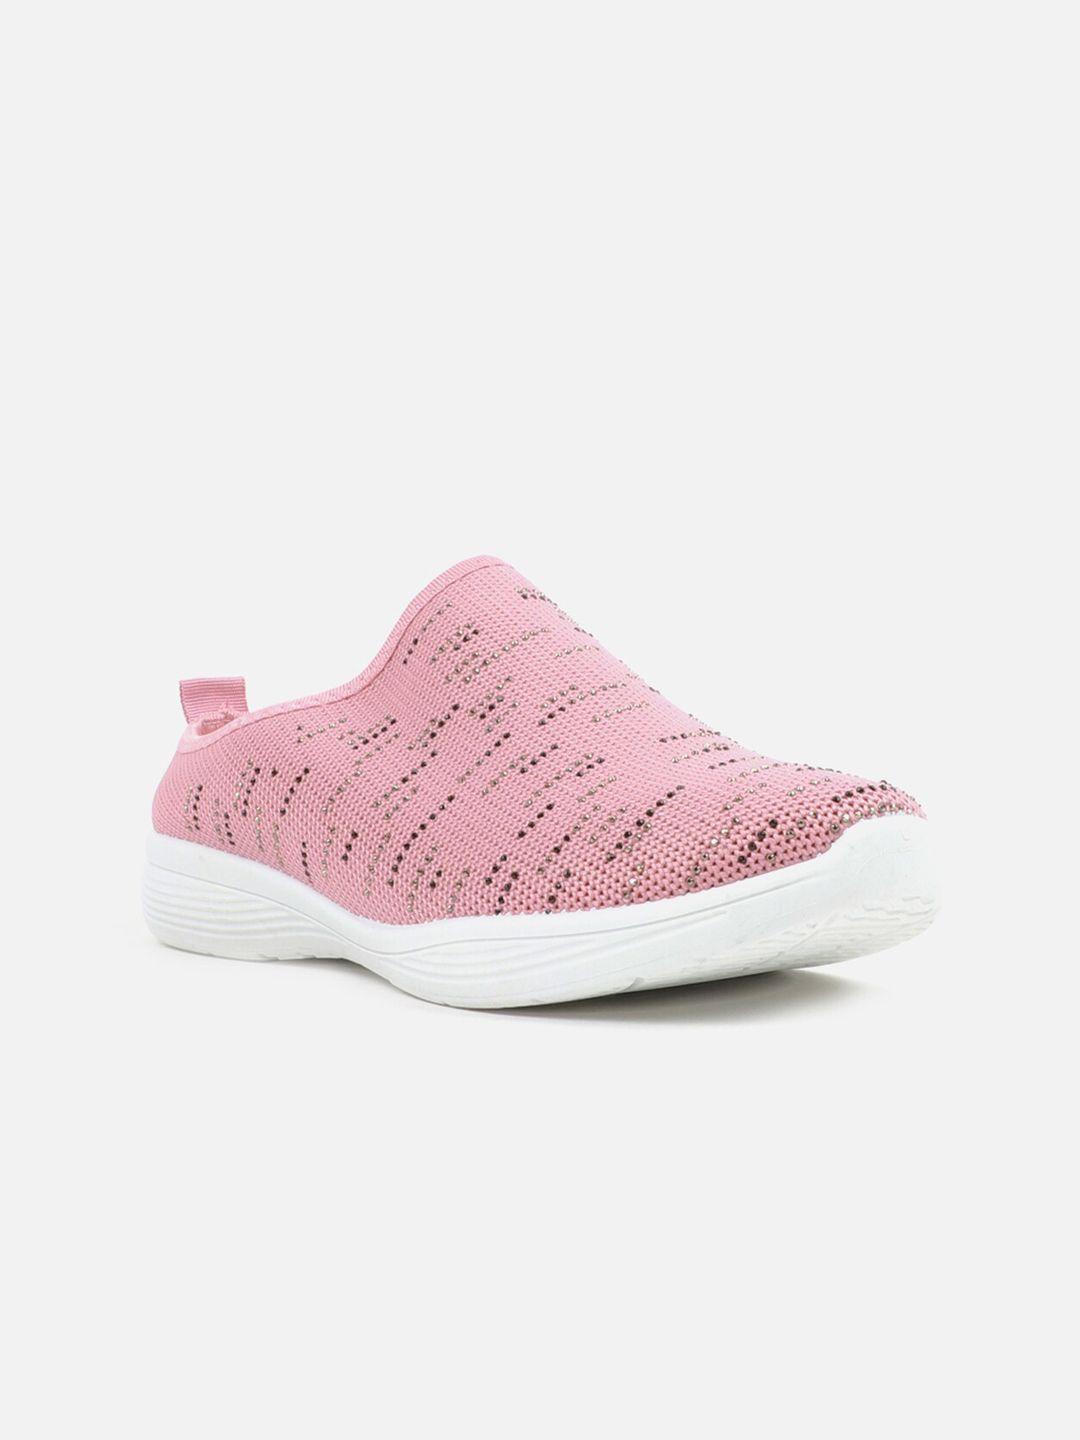 carlton london women pink embellished slip-on  sneakers